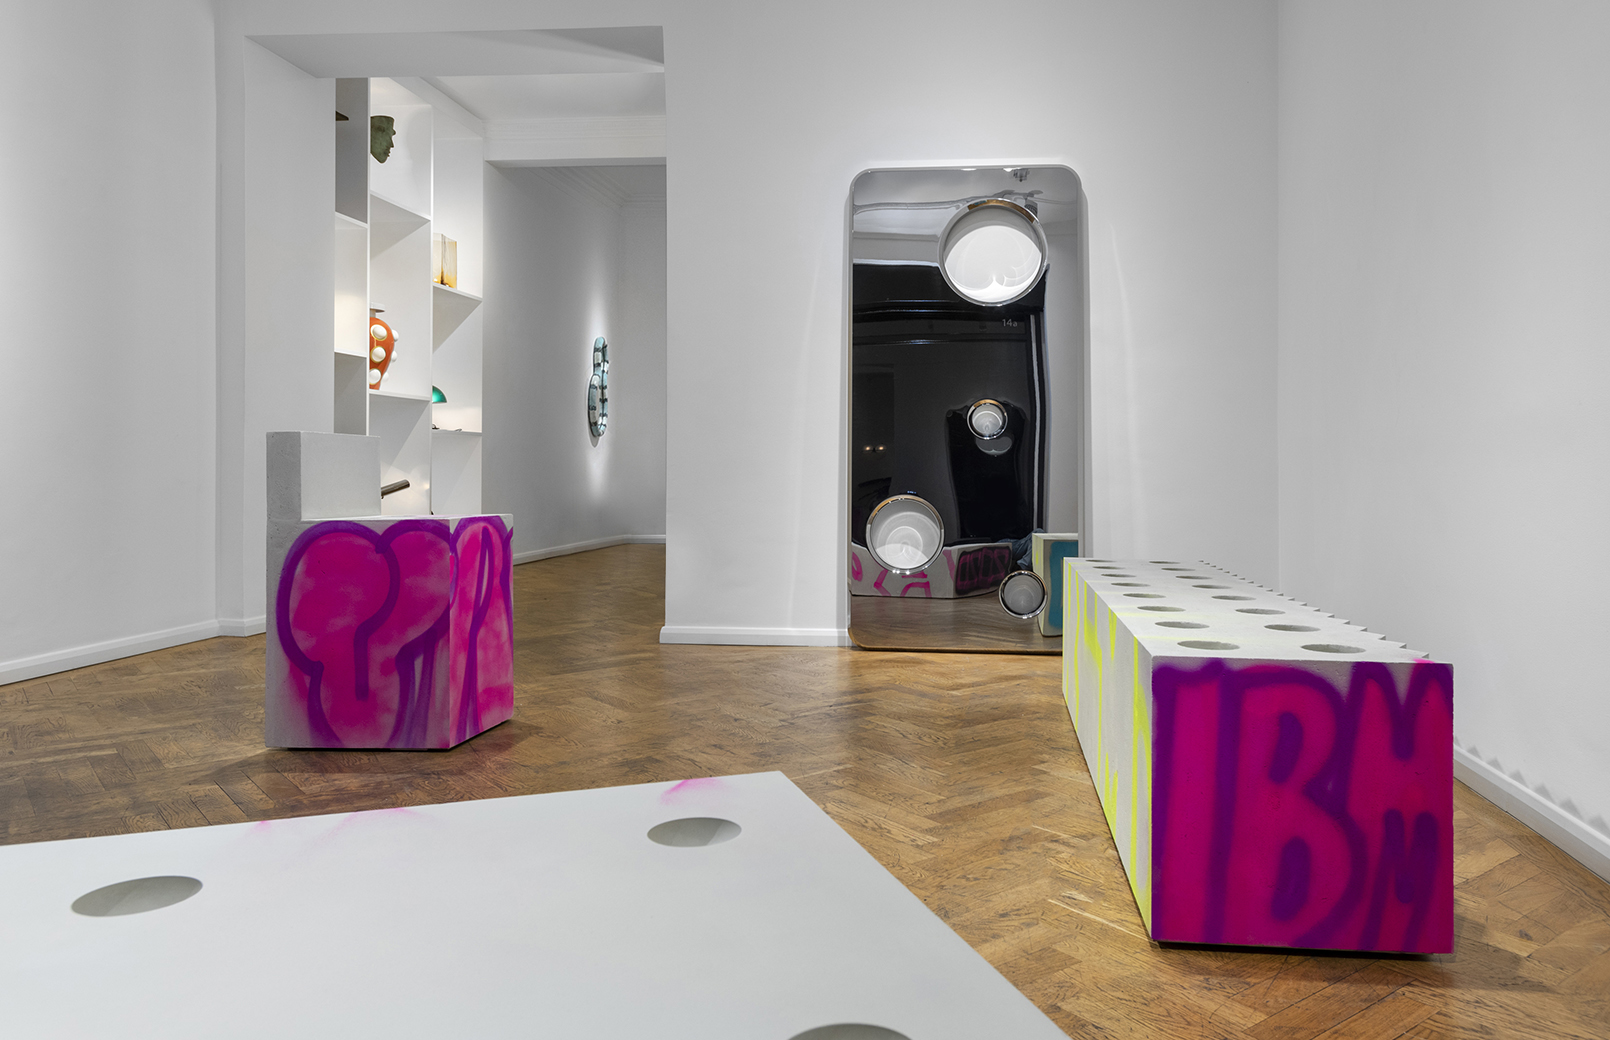 Galerie kreo - EFFLORESCENCE round table by Virgil ABLOH ✨